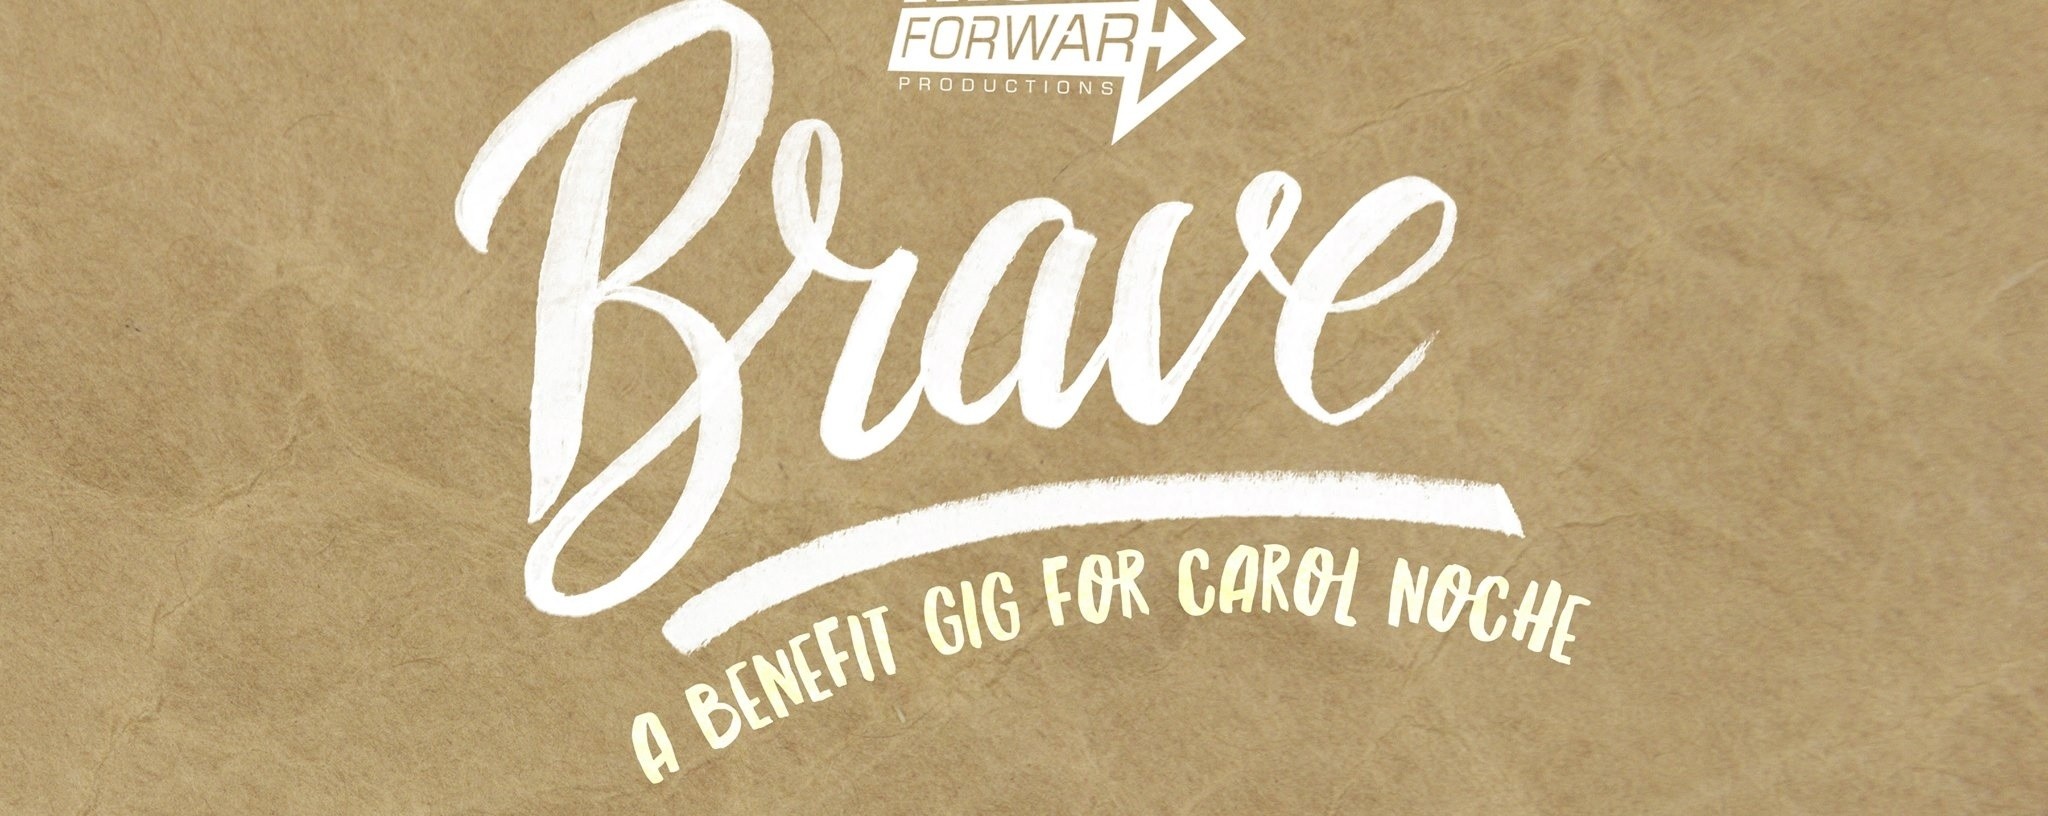 Brave: A Benefit Gig for Carol Noche